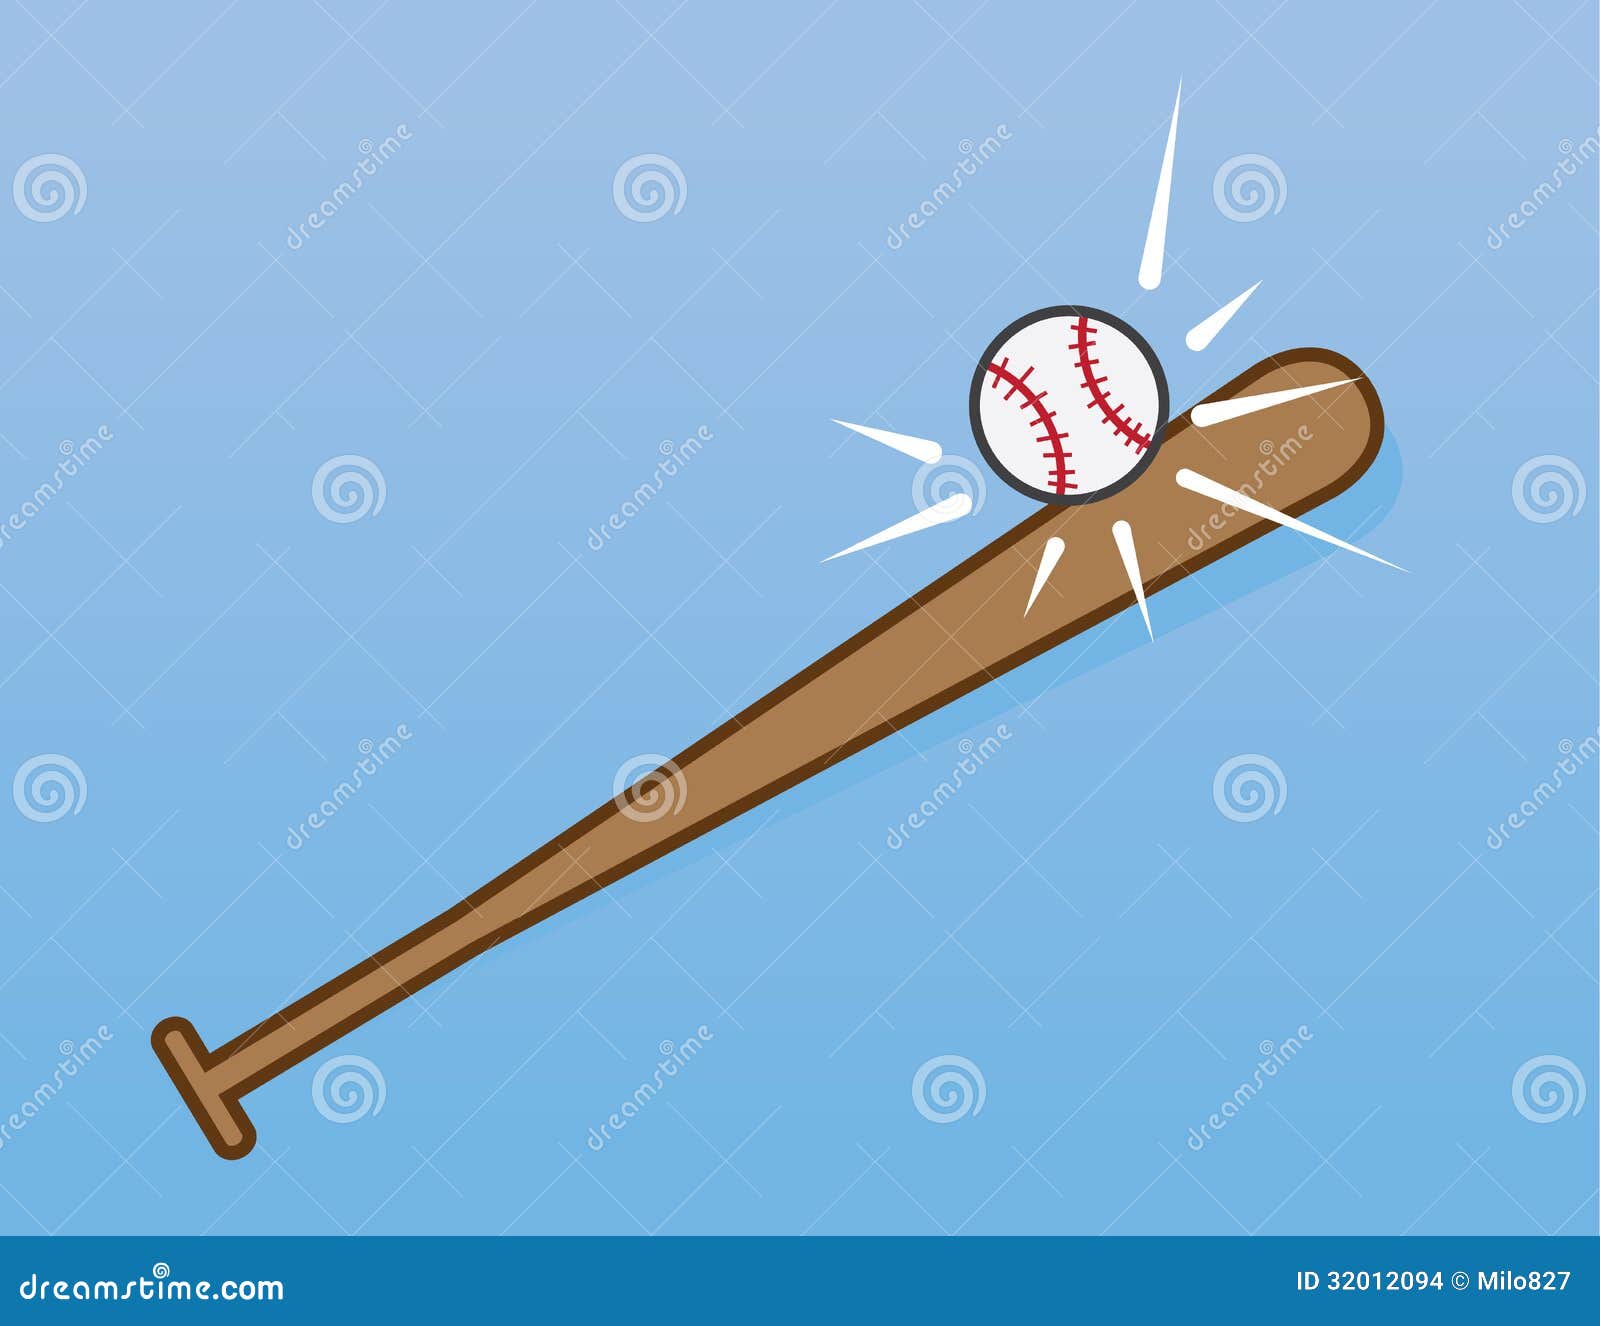 Baseball bat tattoo meaning